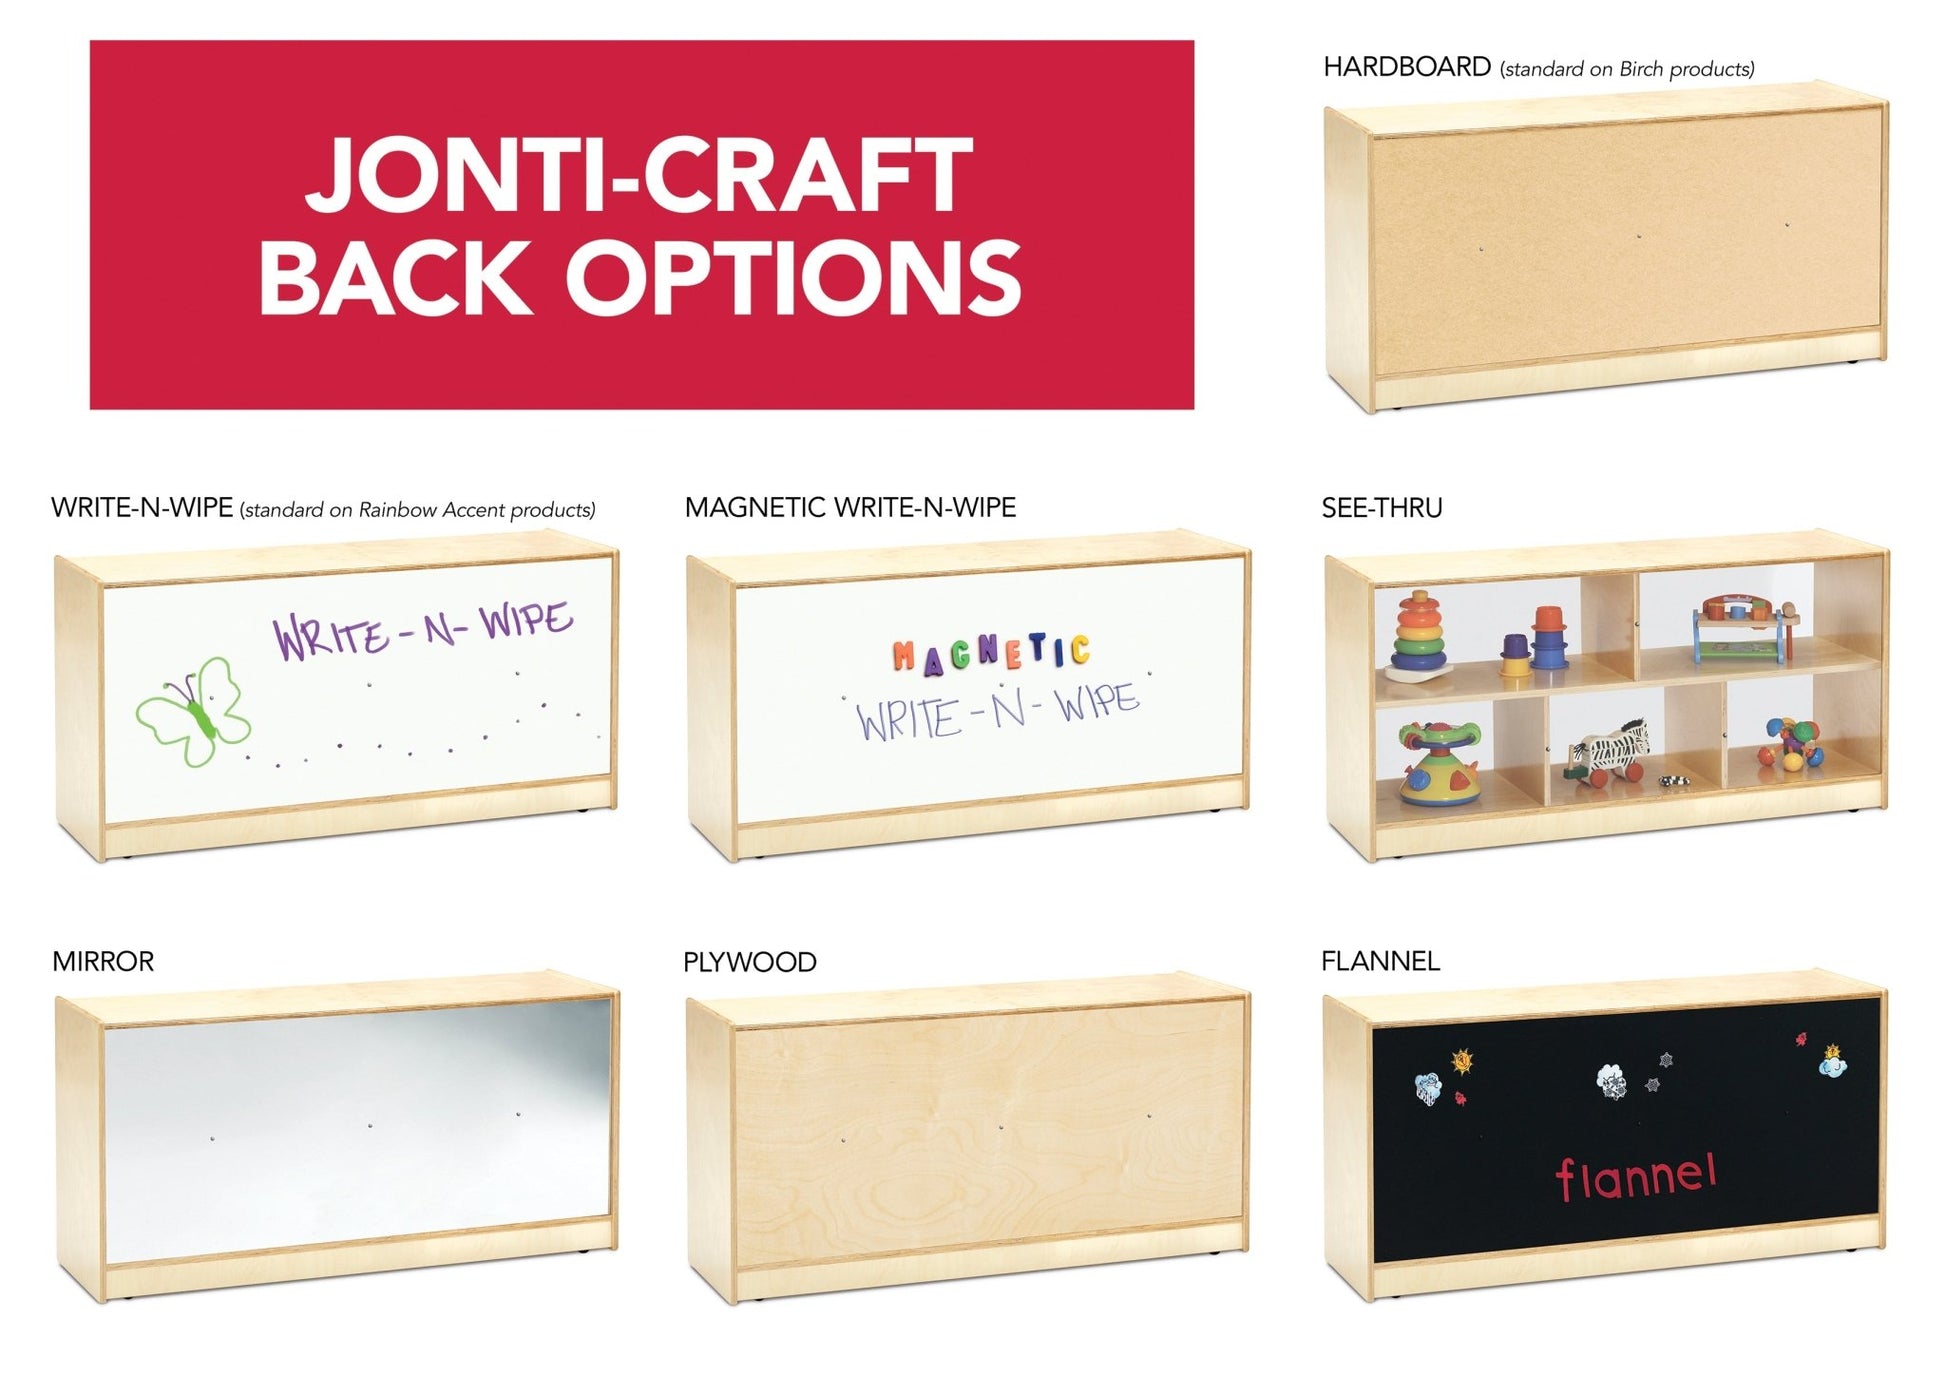 Jonti-Craft Baltic Birch 10-Cubby Mobile Storage Unit with Colorful Trays (Jonti-Craft JON-0611JC) - SchoolOutlet